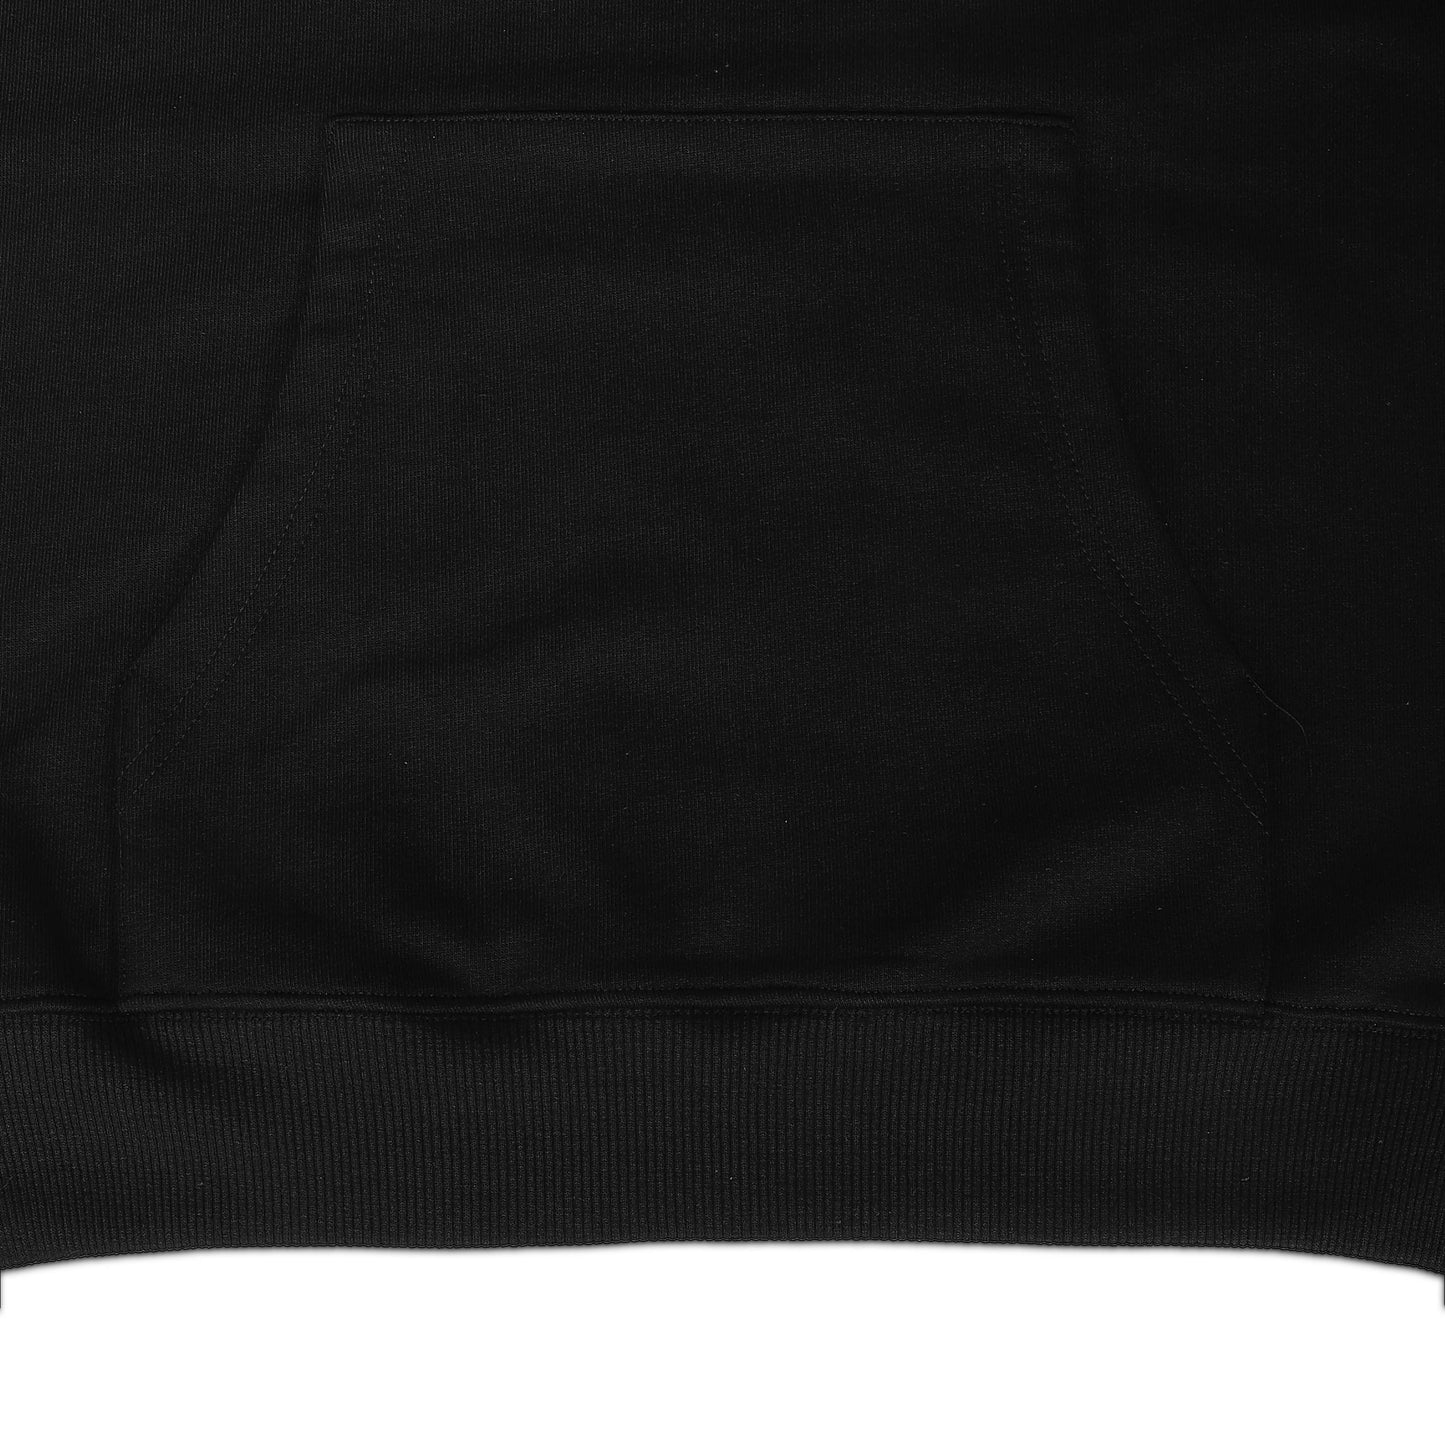 Soulsfeng Black Sweatshirt